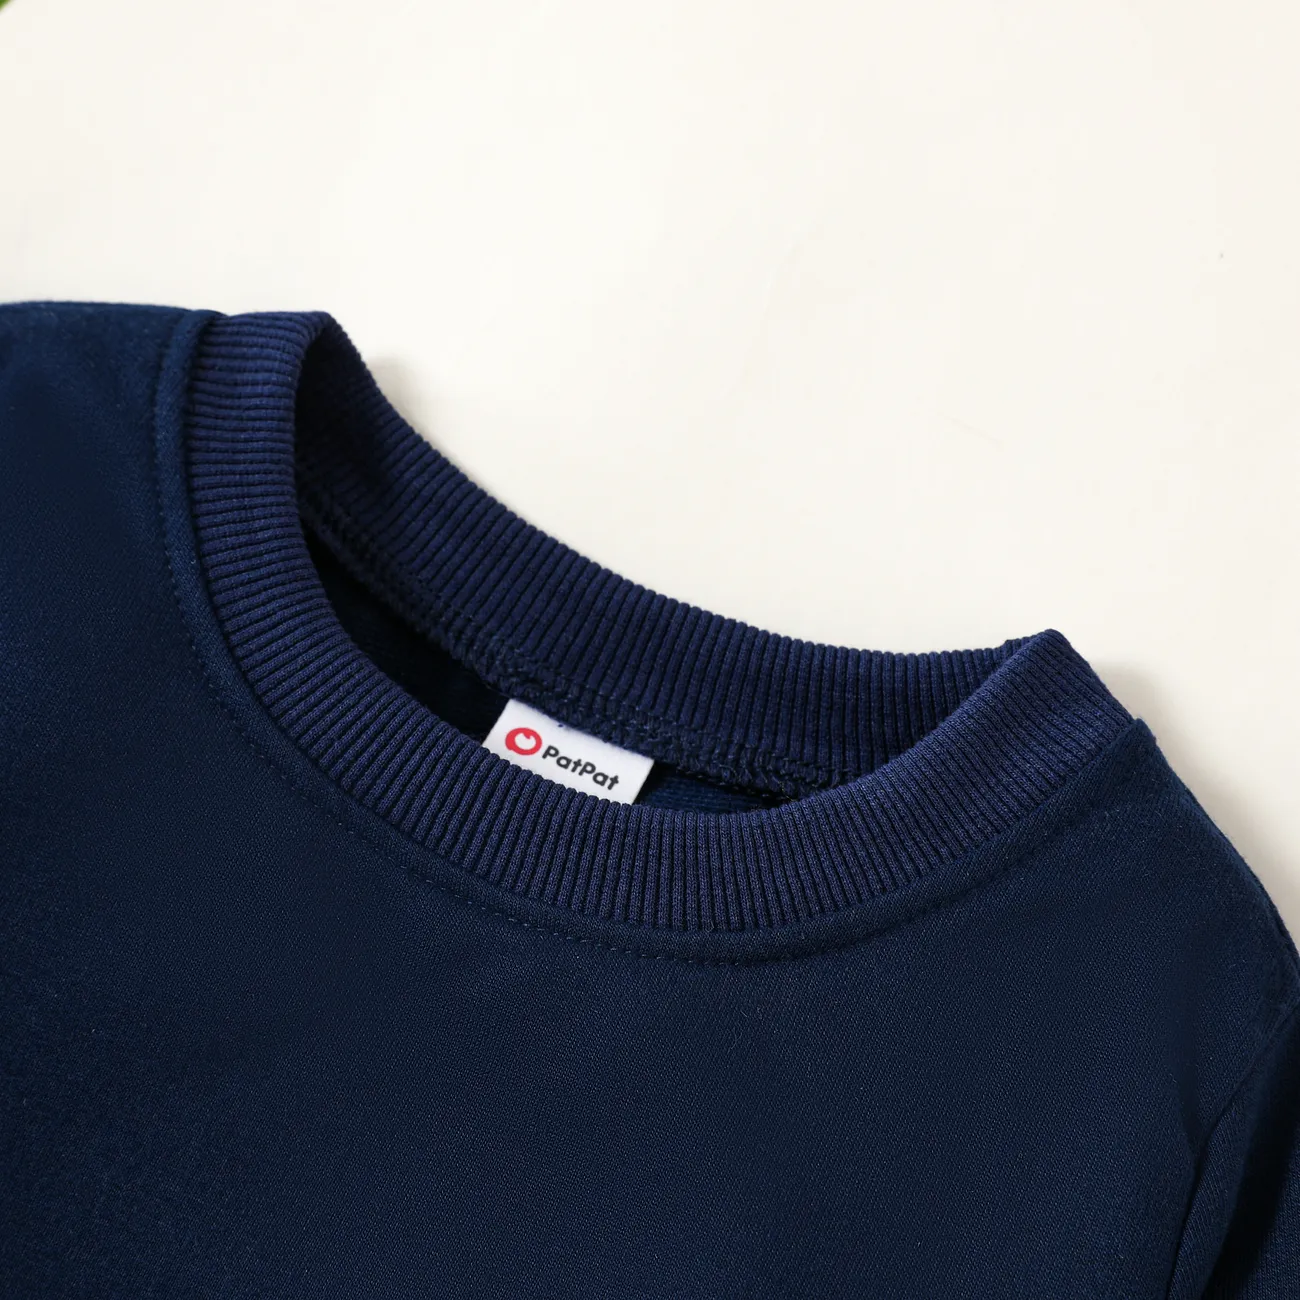 Toddler Boy Excavator Embroidered Stripe/Solid Pullover Sweatshirt Royal Blue big image 1